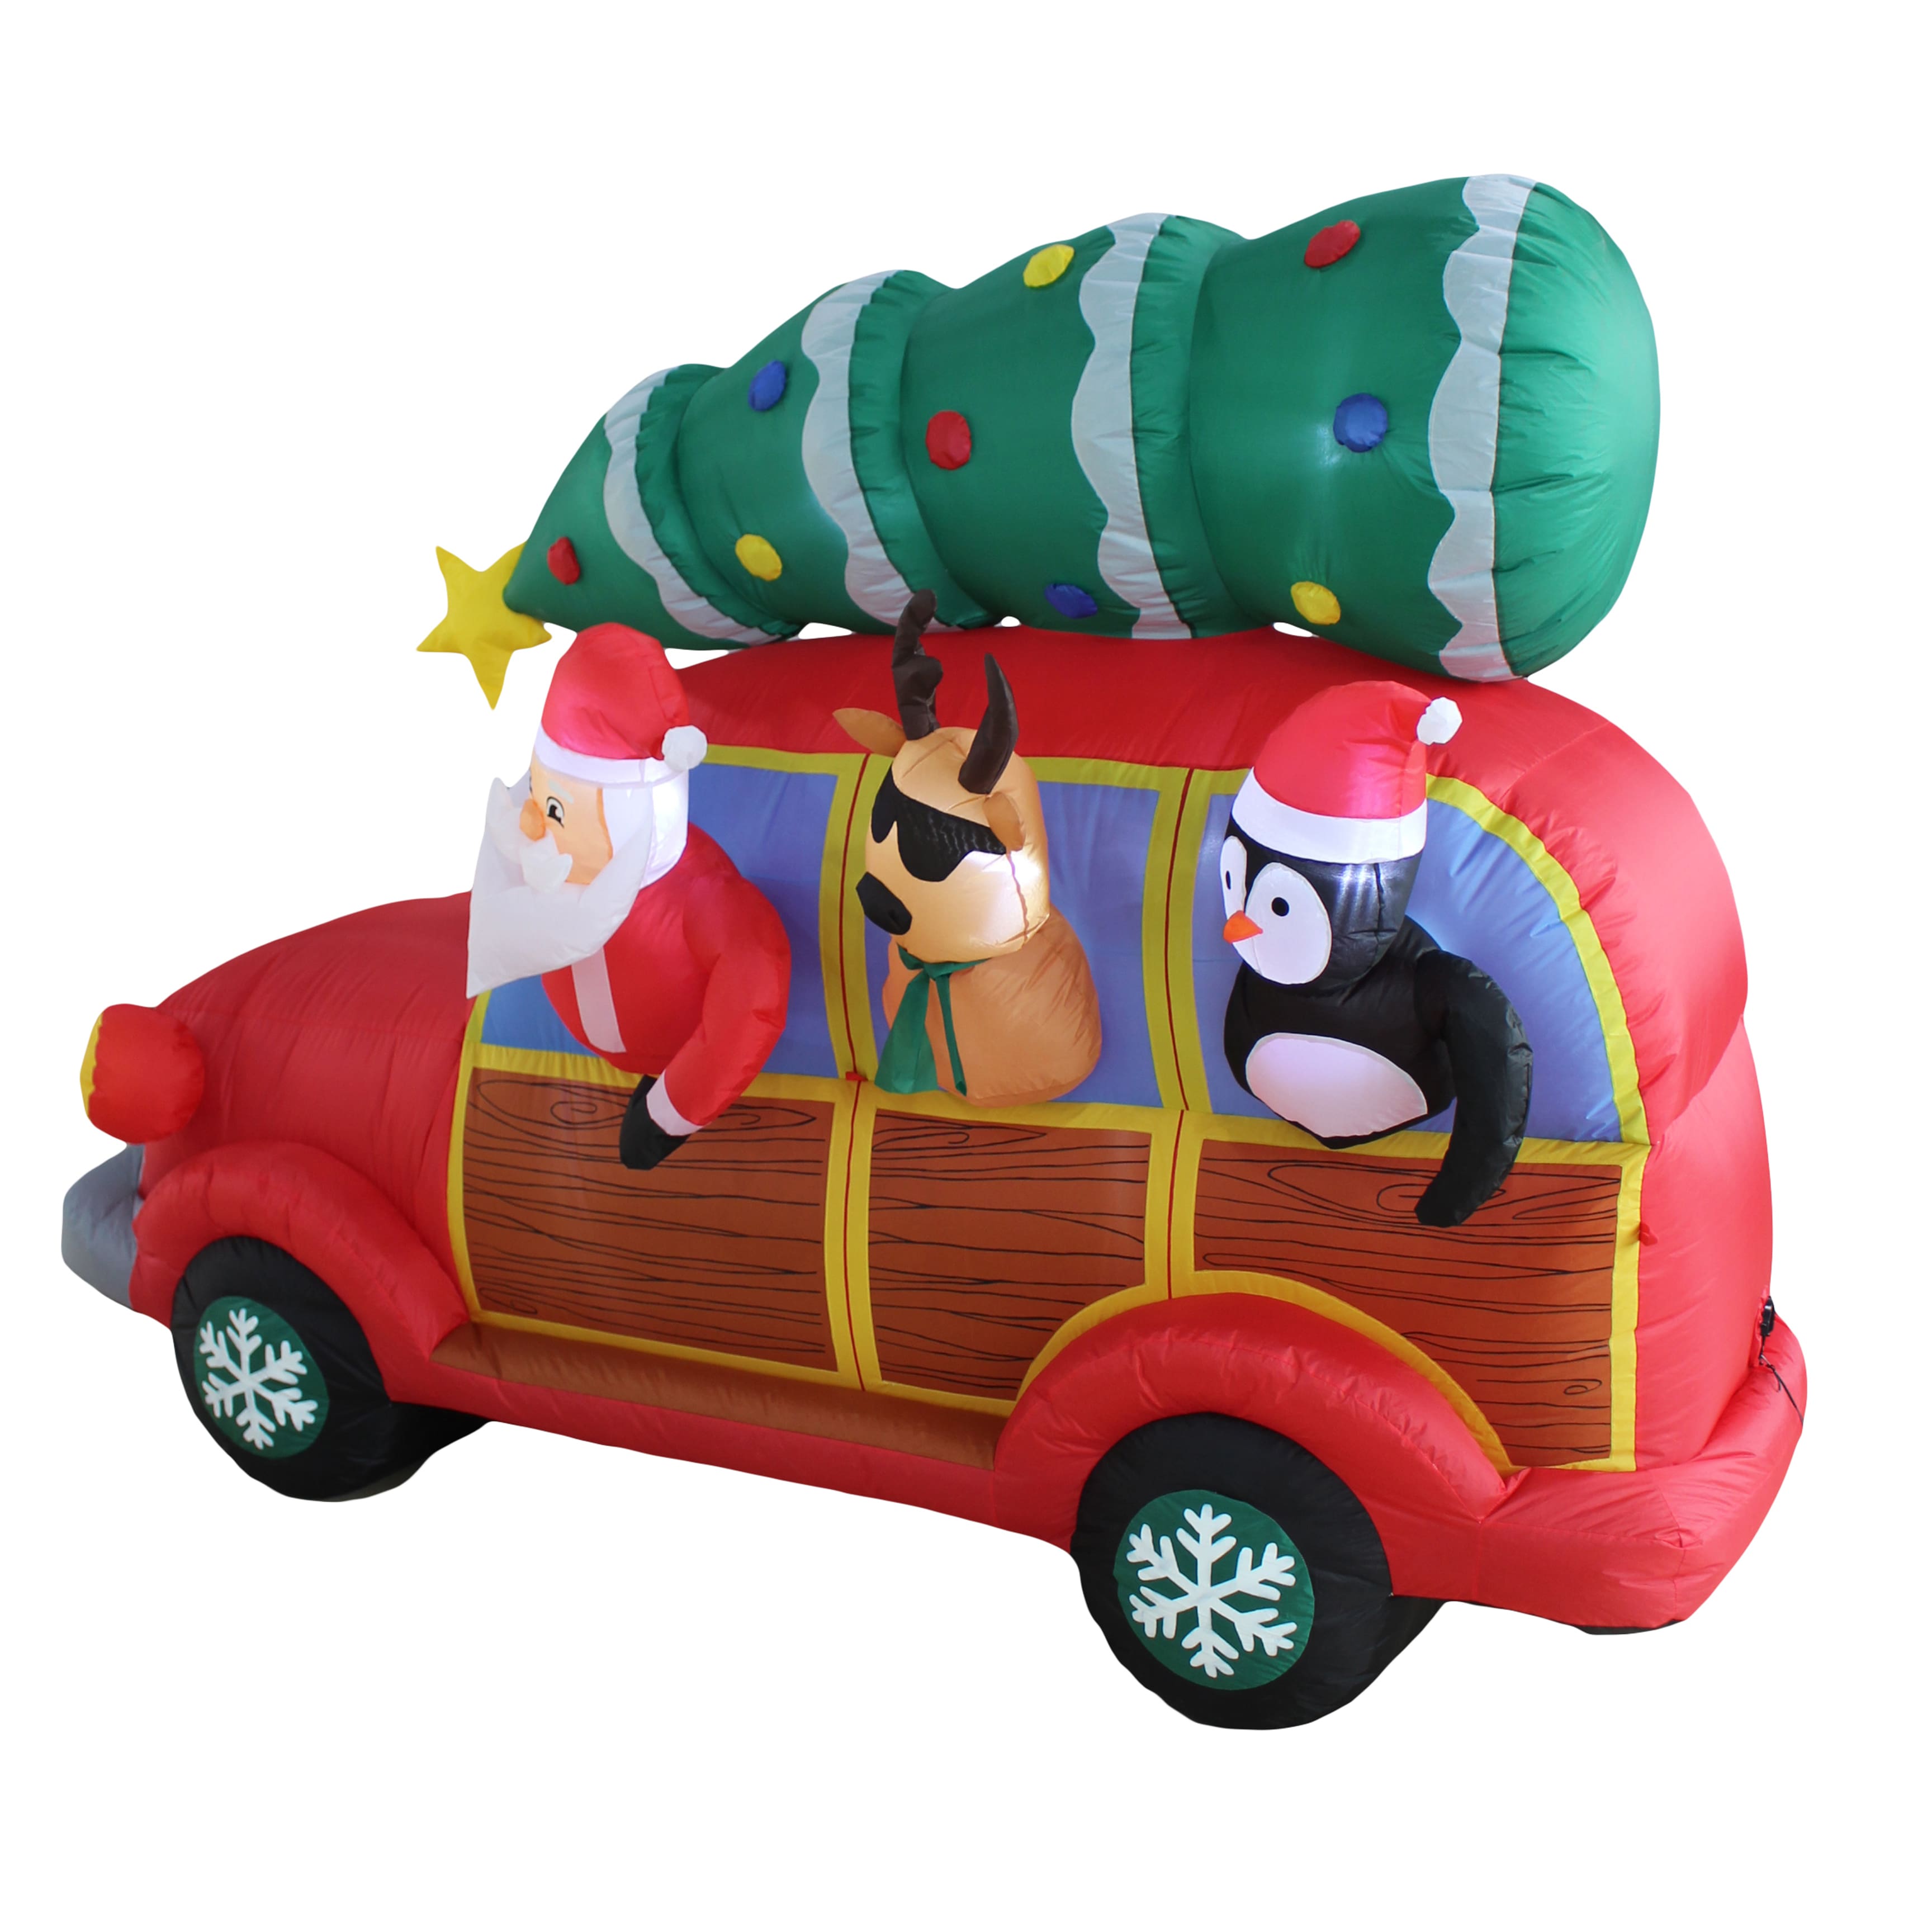 7ft. Inflatable Santa&#x27;s Christmas Woody